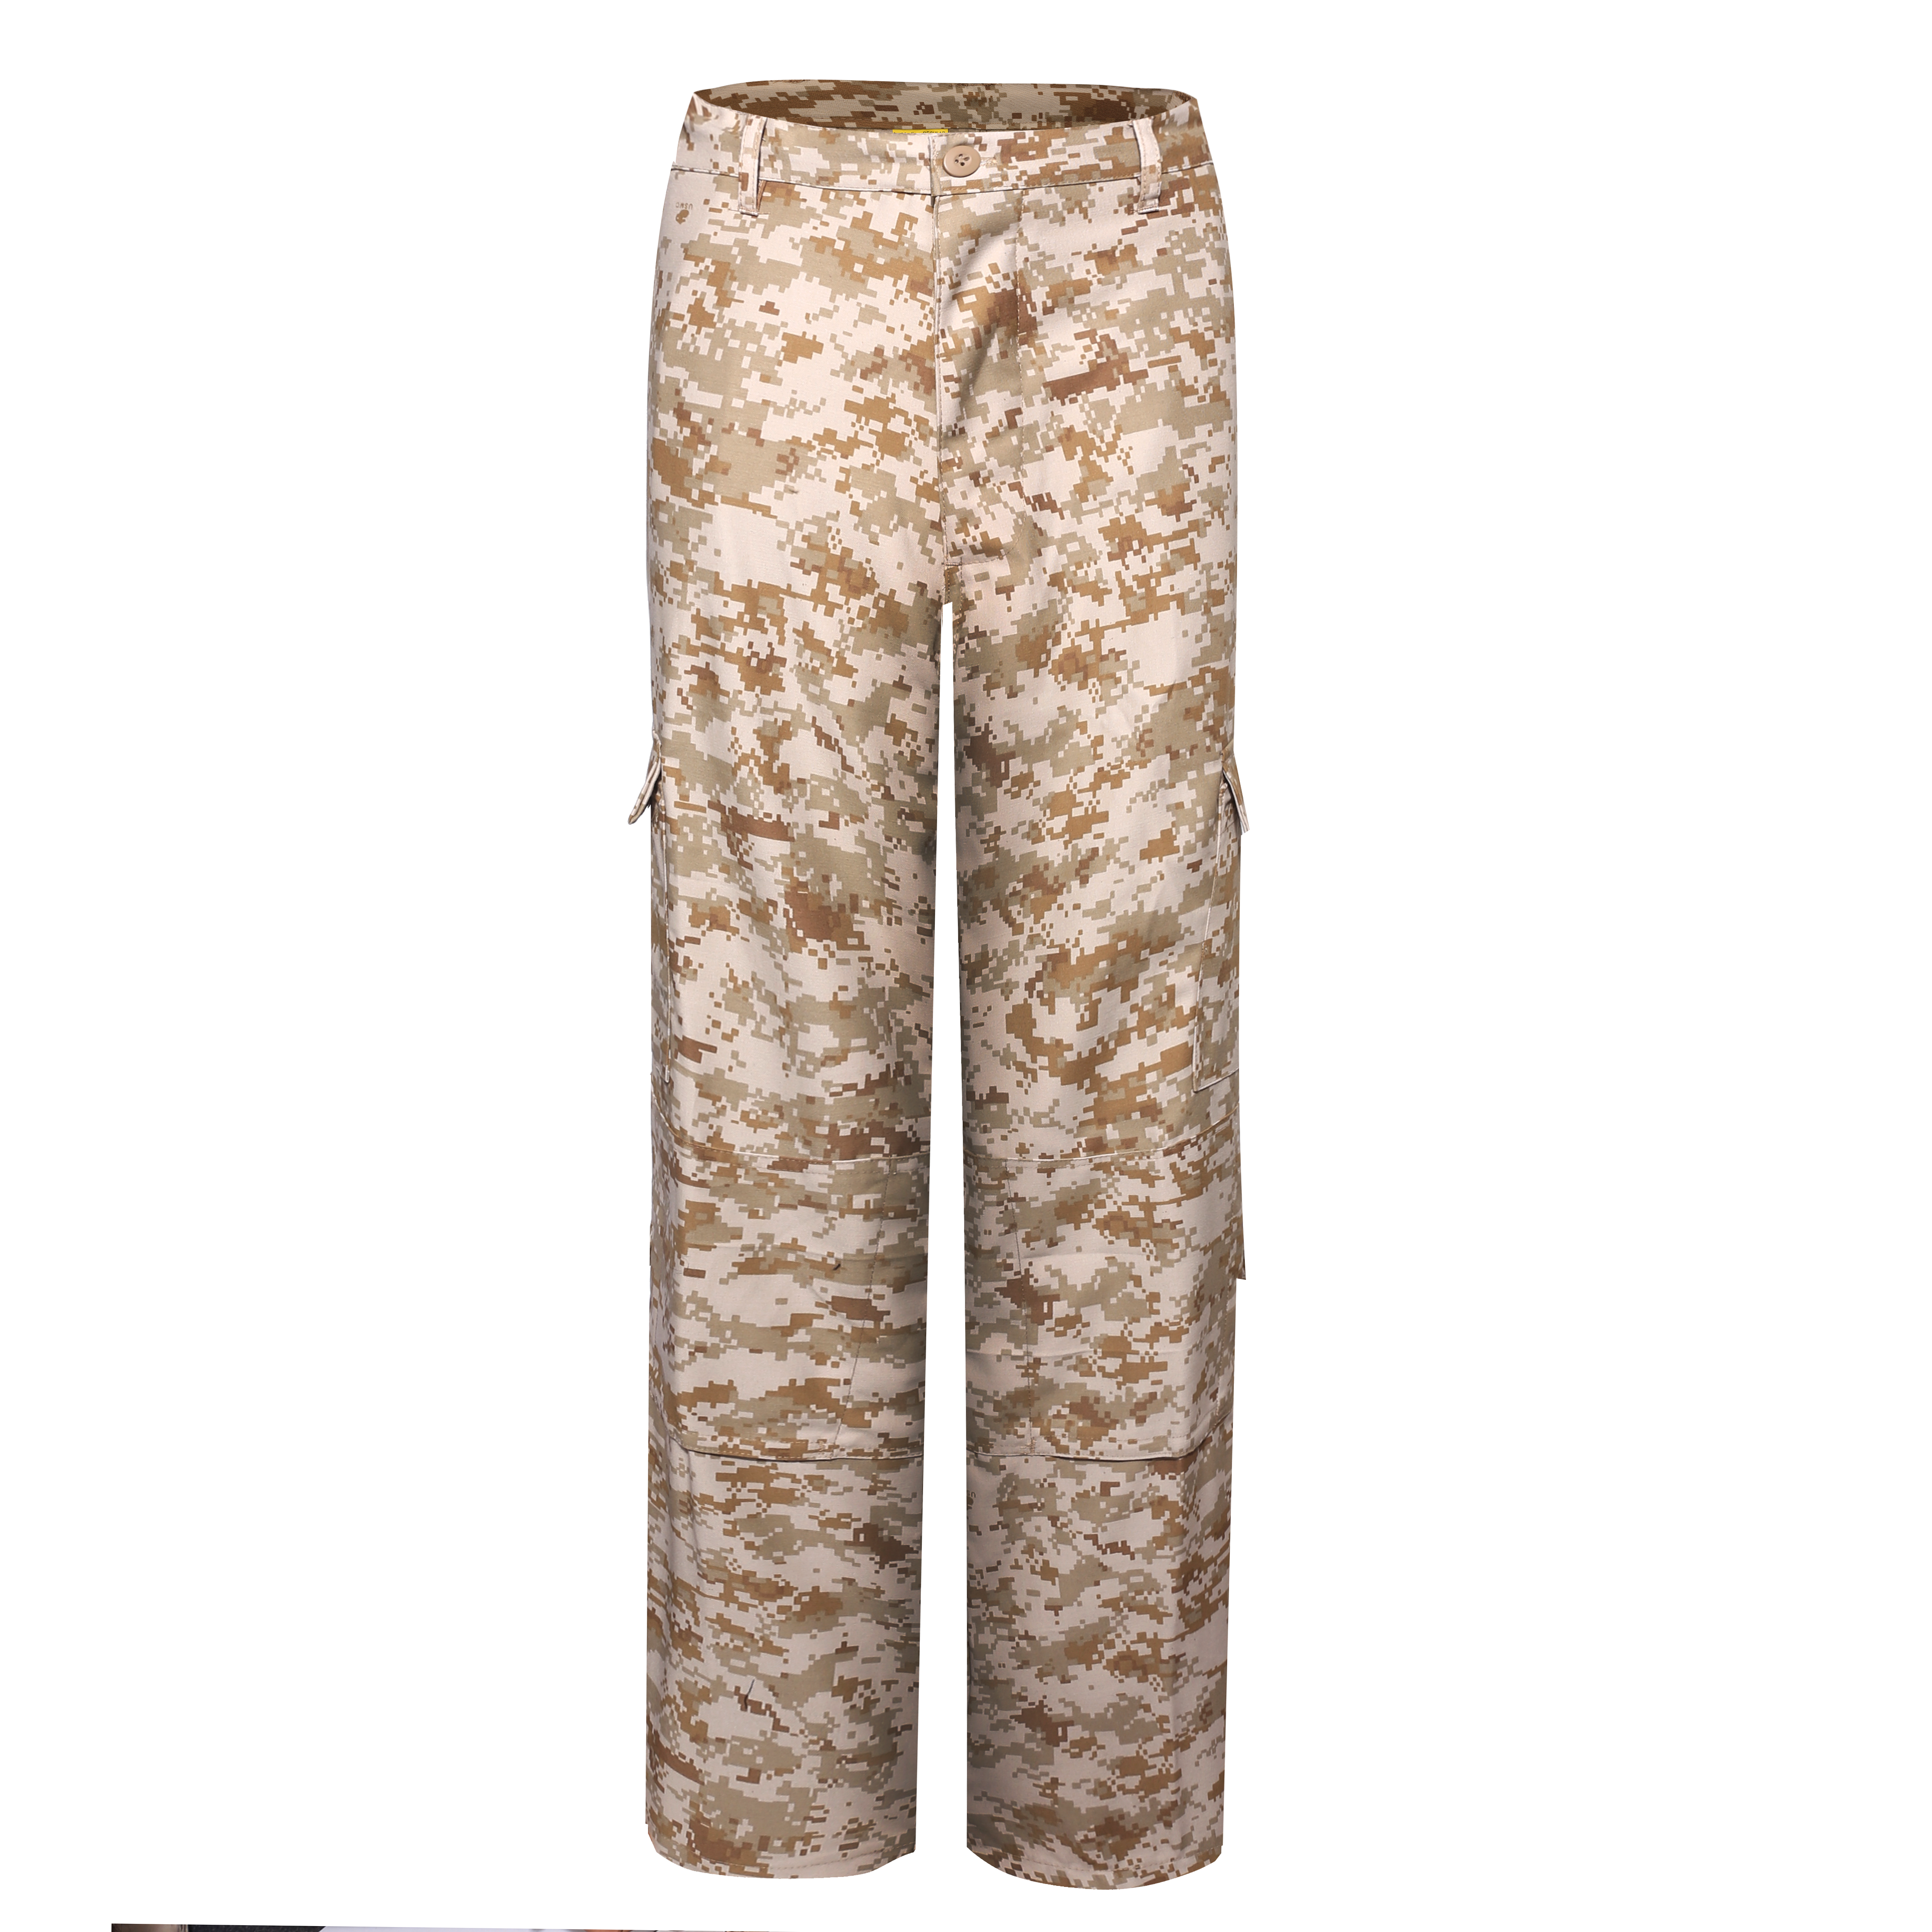 Camouflage Desert pants Military Uniform